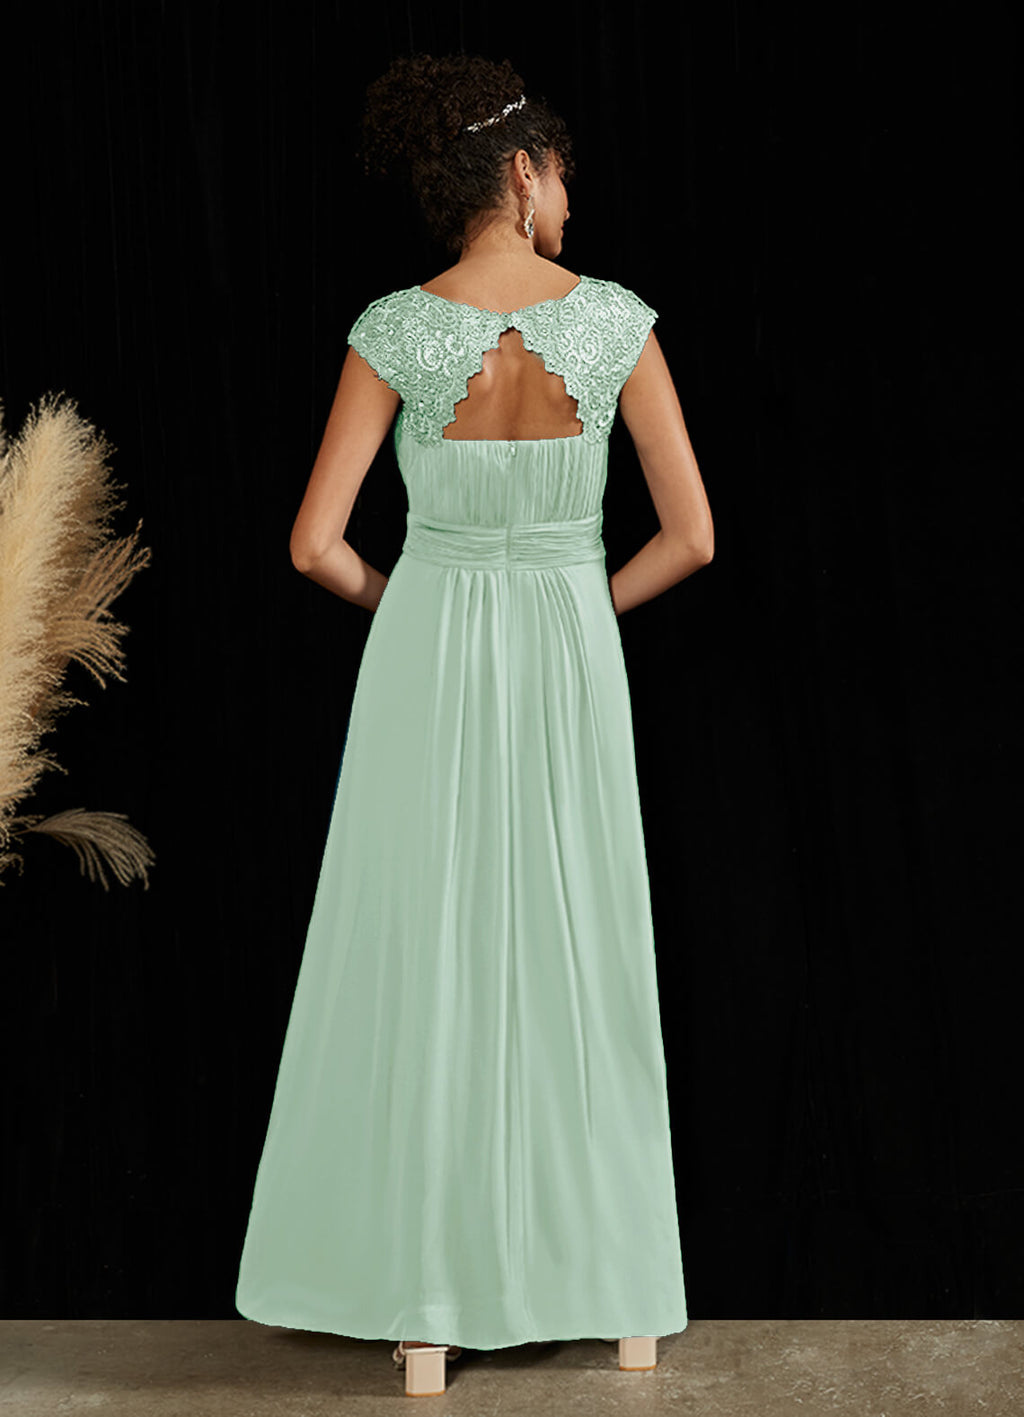 NZ Bridal Empire Sage Green Chiffon Lace Flowy bridesmaid dresses 09996ep Ryan a